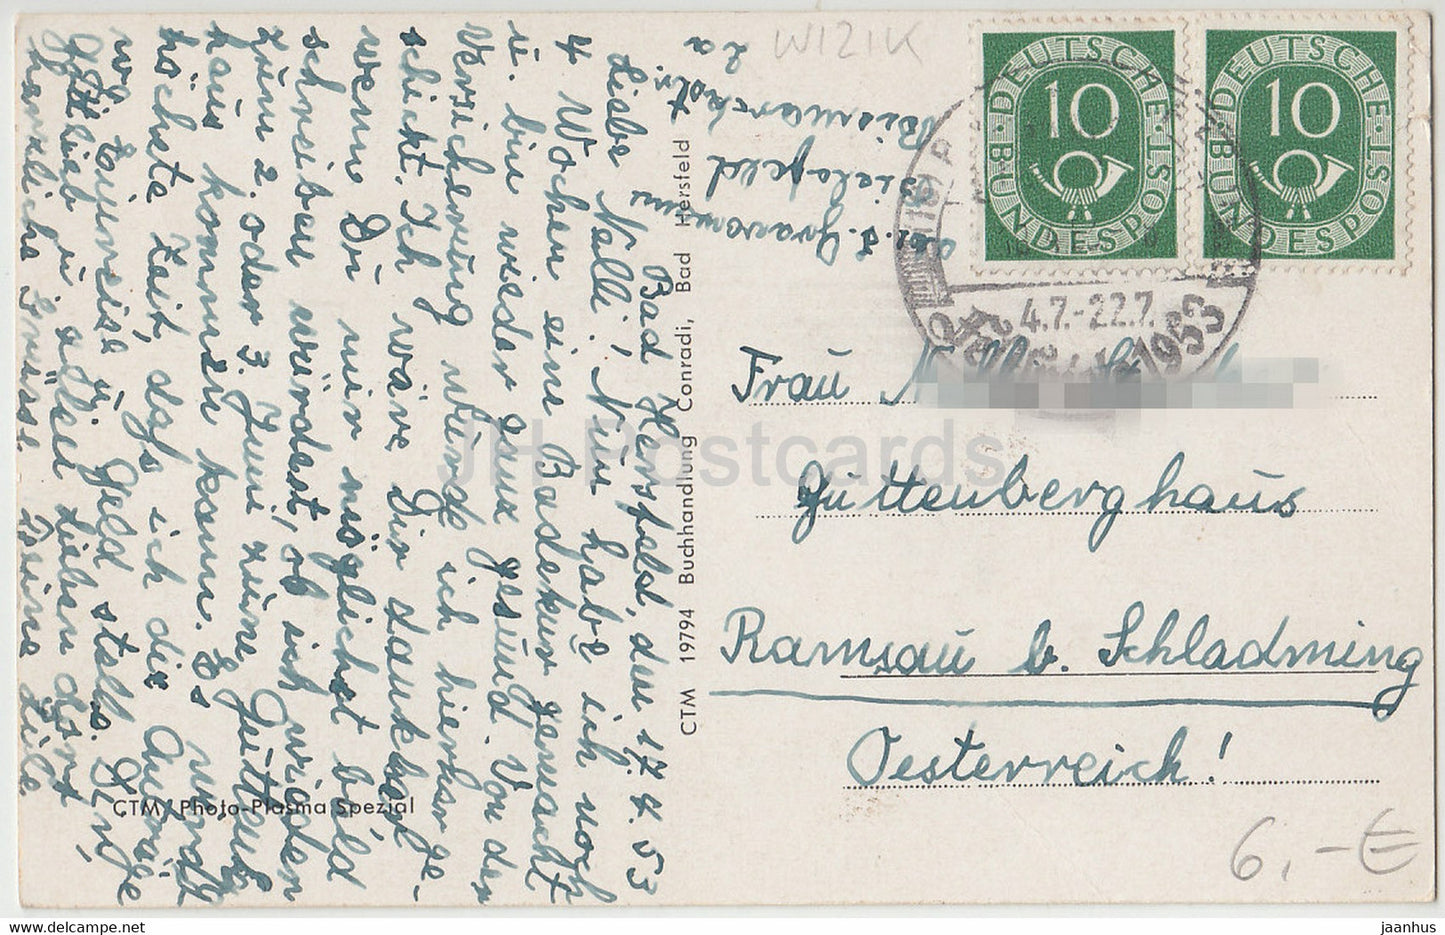 Bad Hersfeld - Rathaus mit Lullusbrunnen - carte postale ancienne - 1953 - Allemagne - utilisé